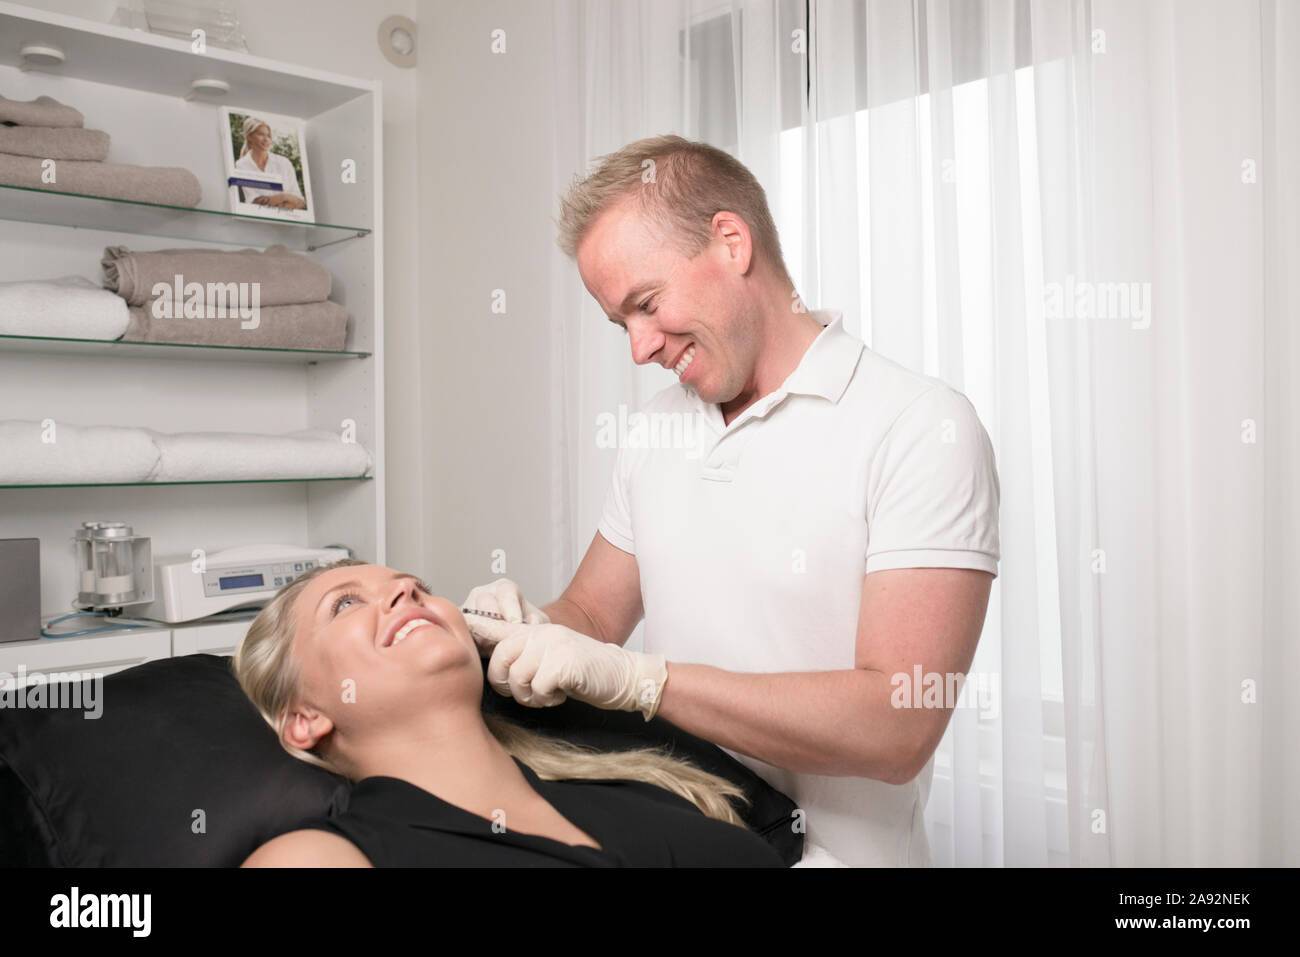 Woman receiving Botox injection Stock Photo